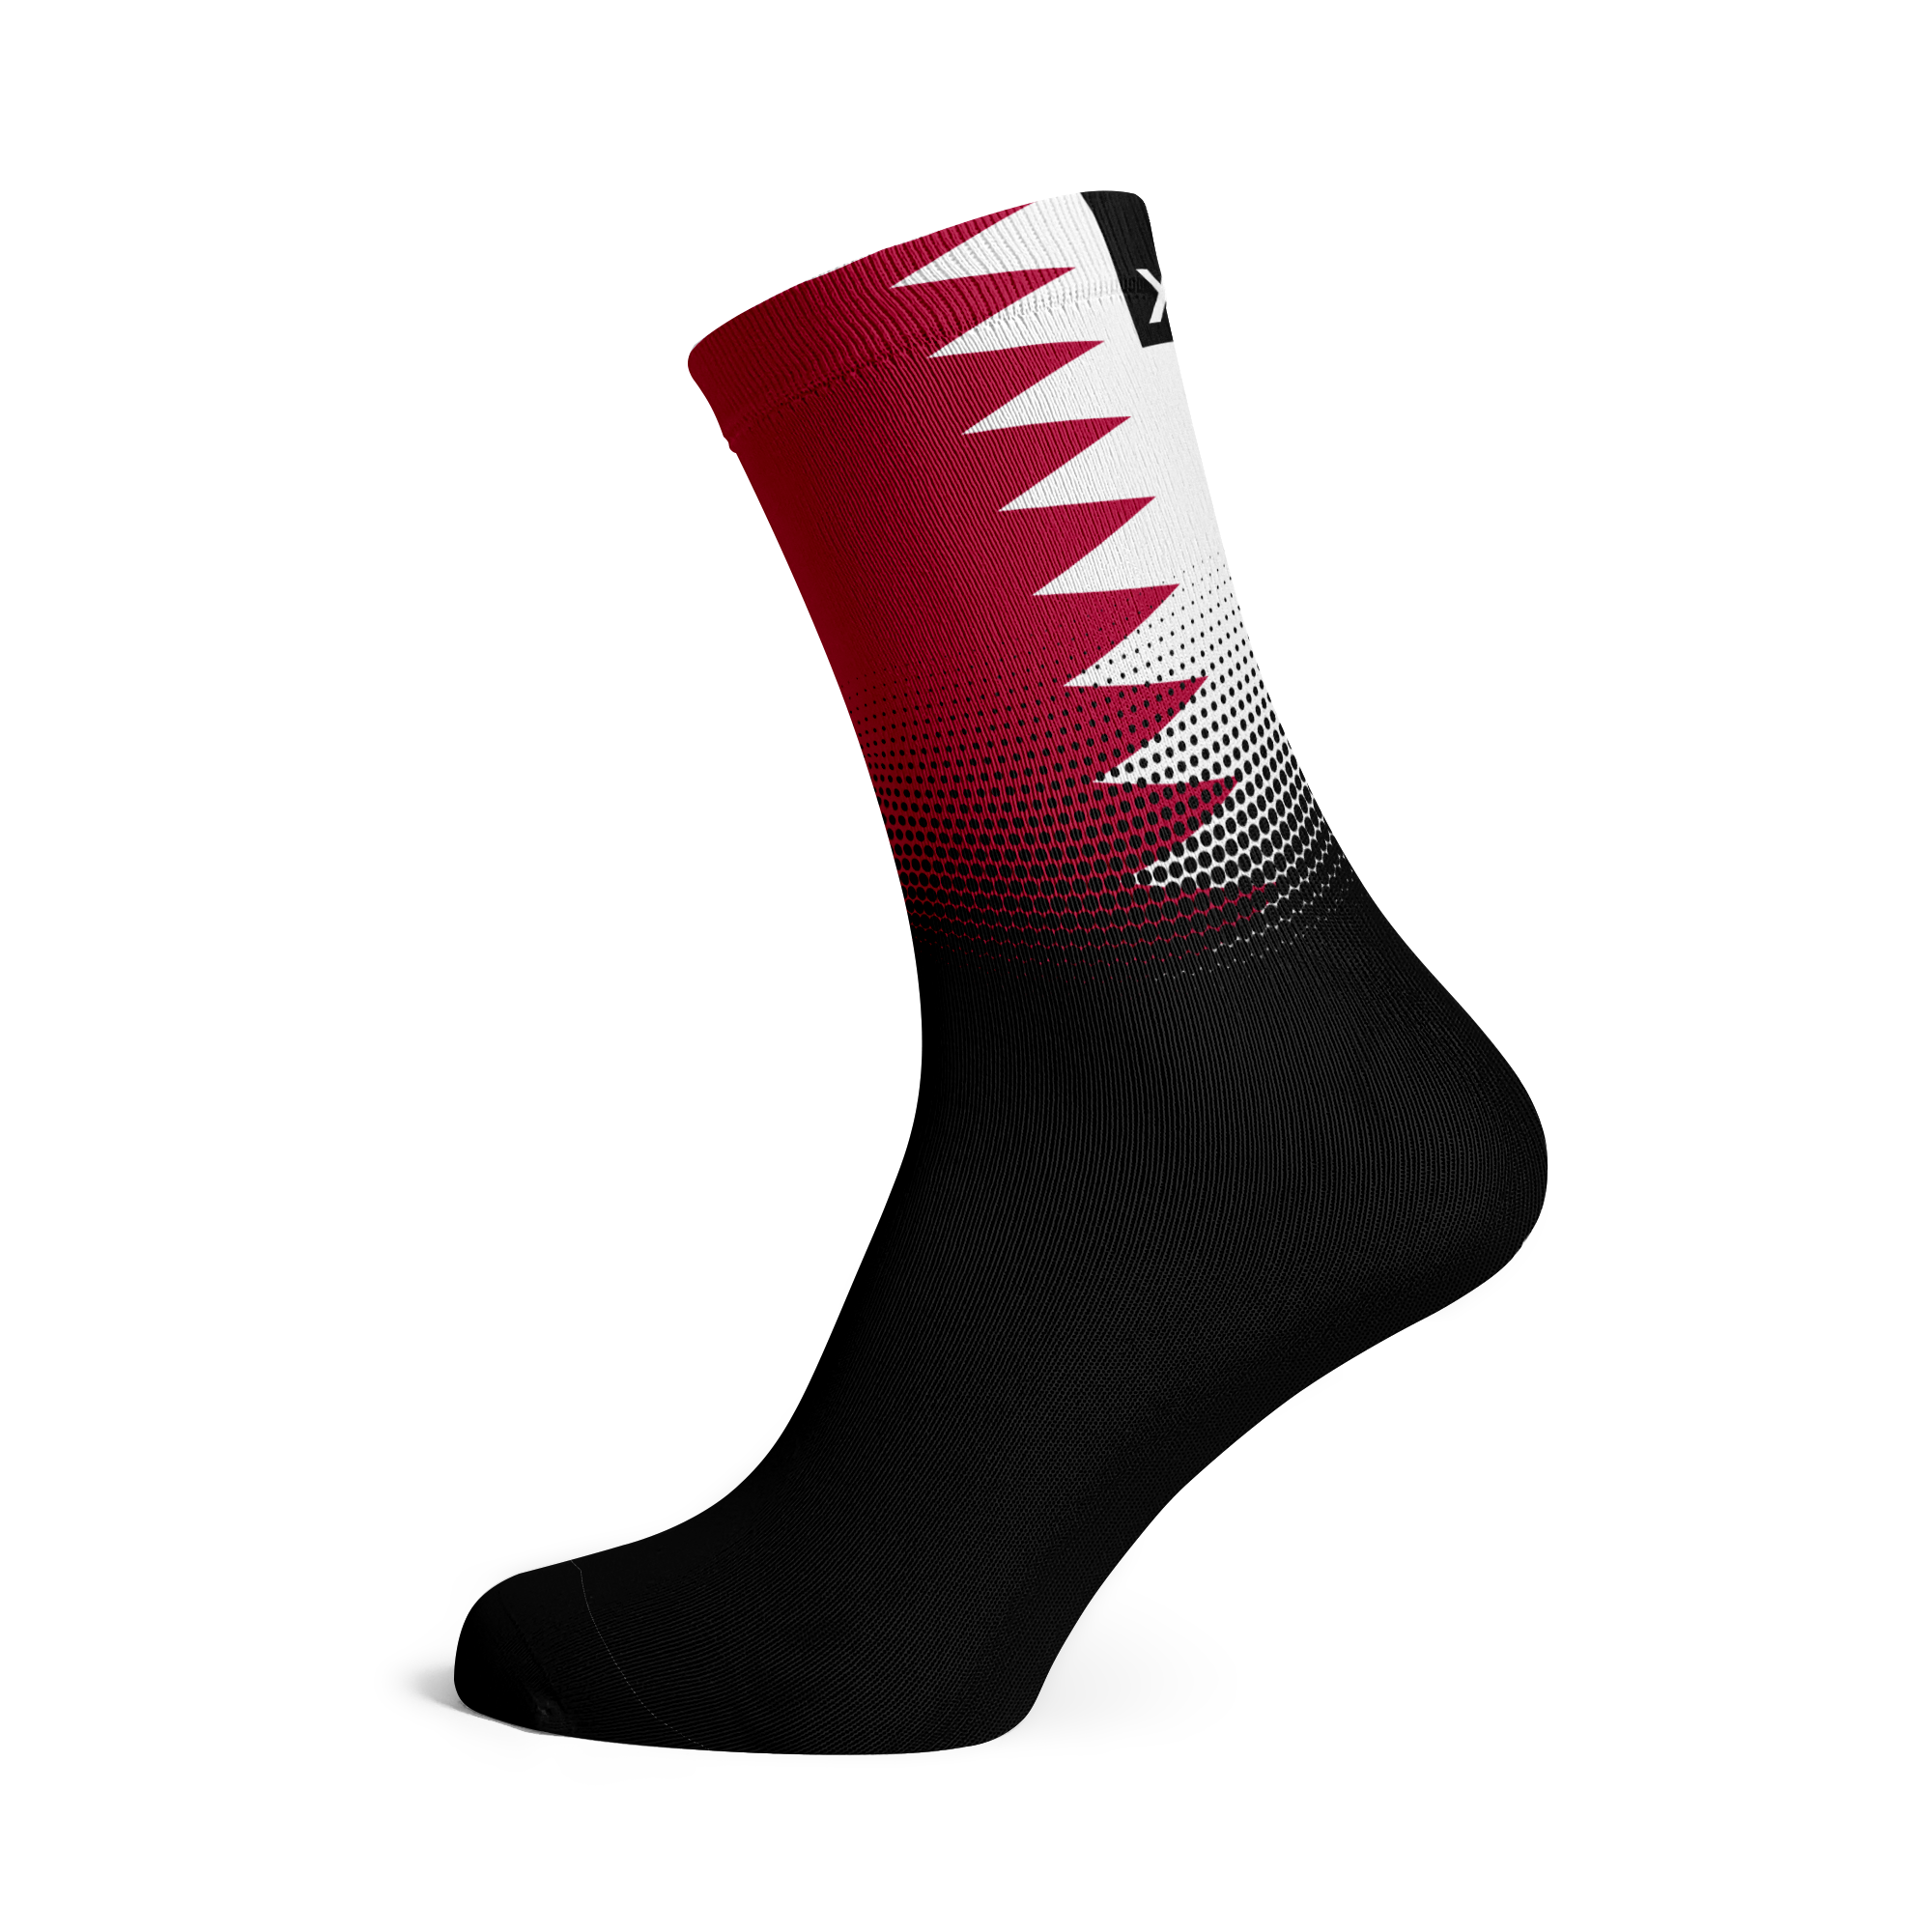 Qatar Flag Socks